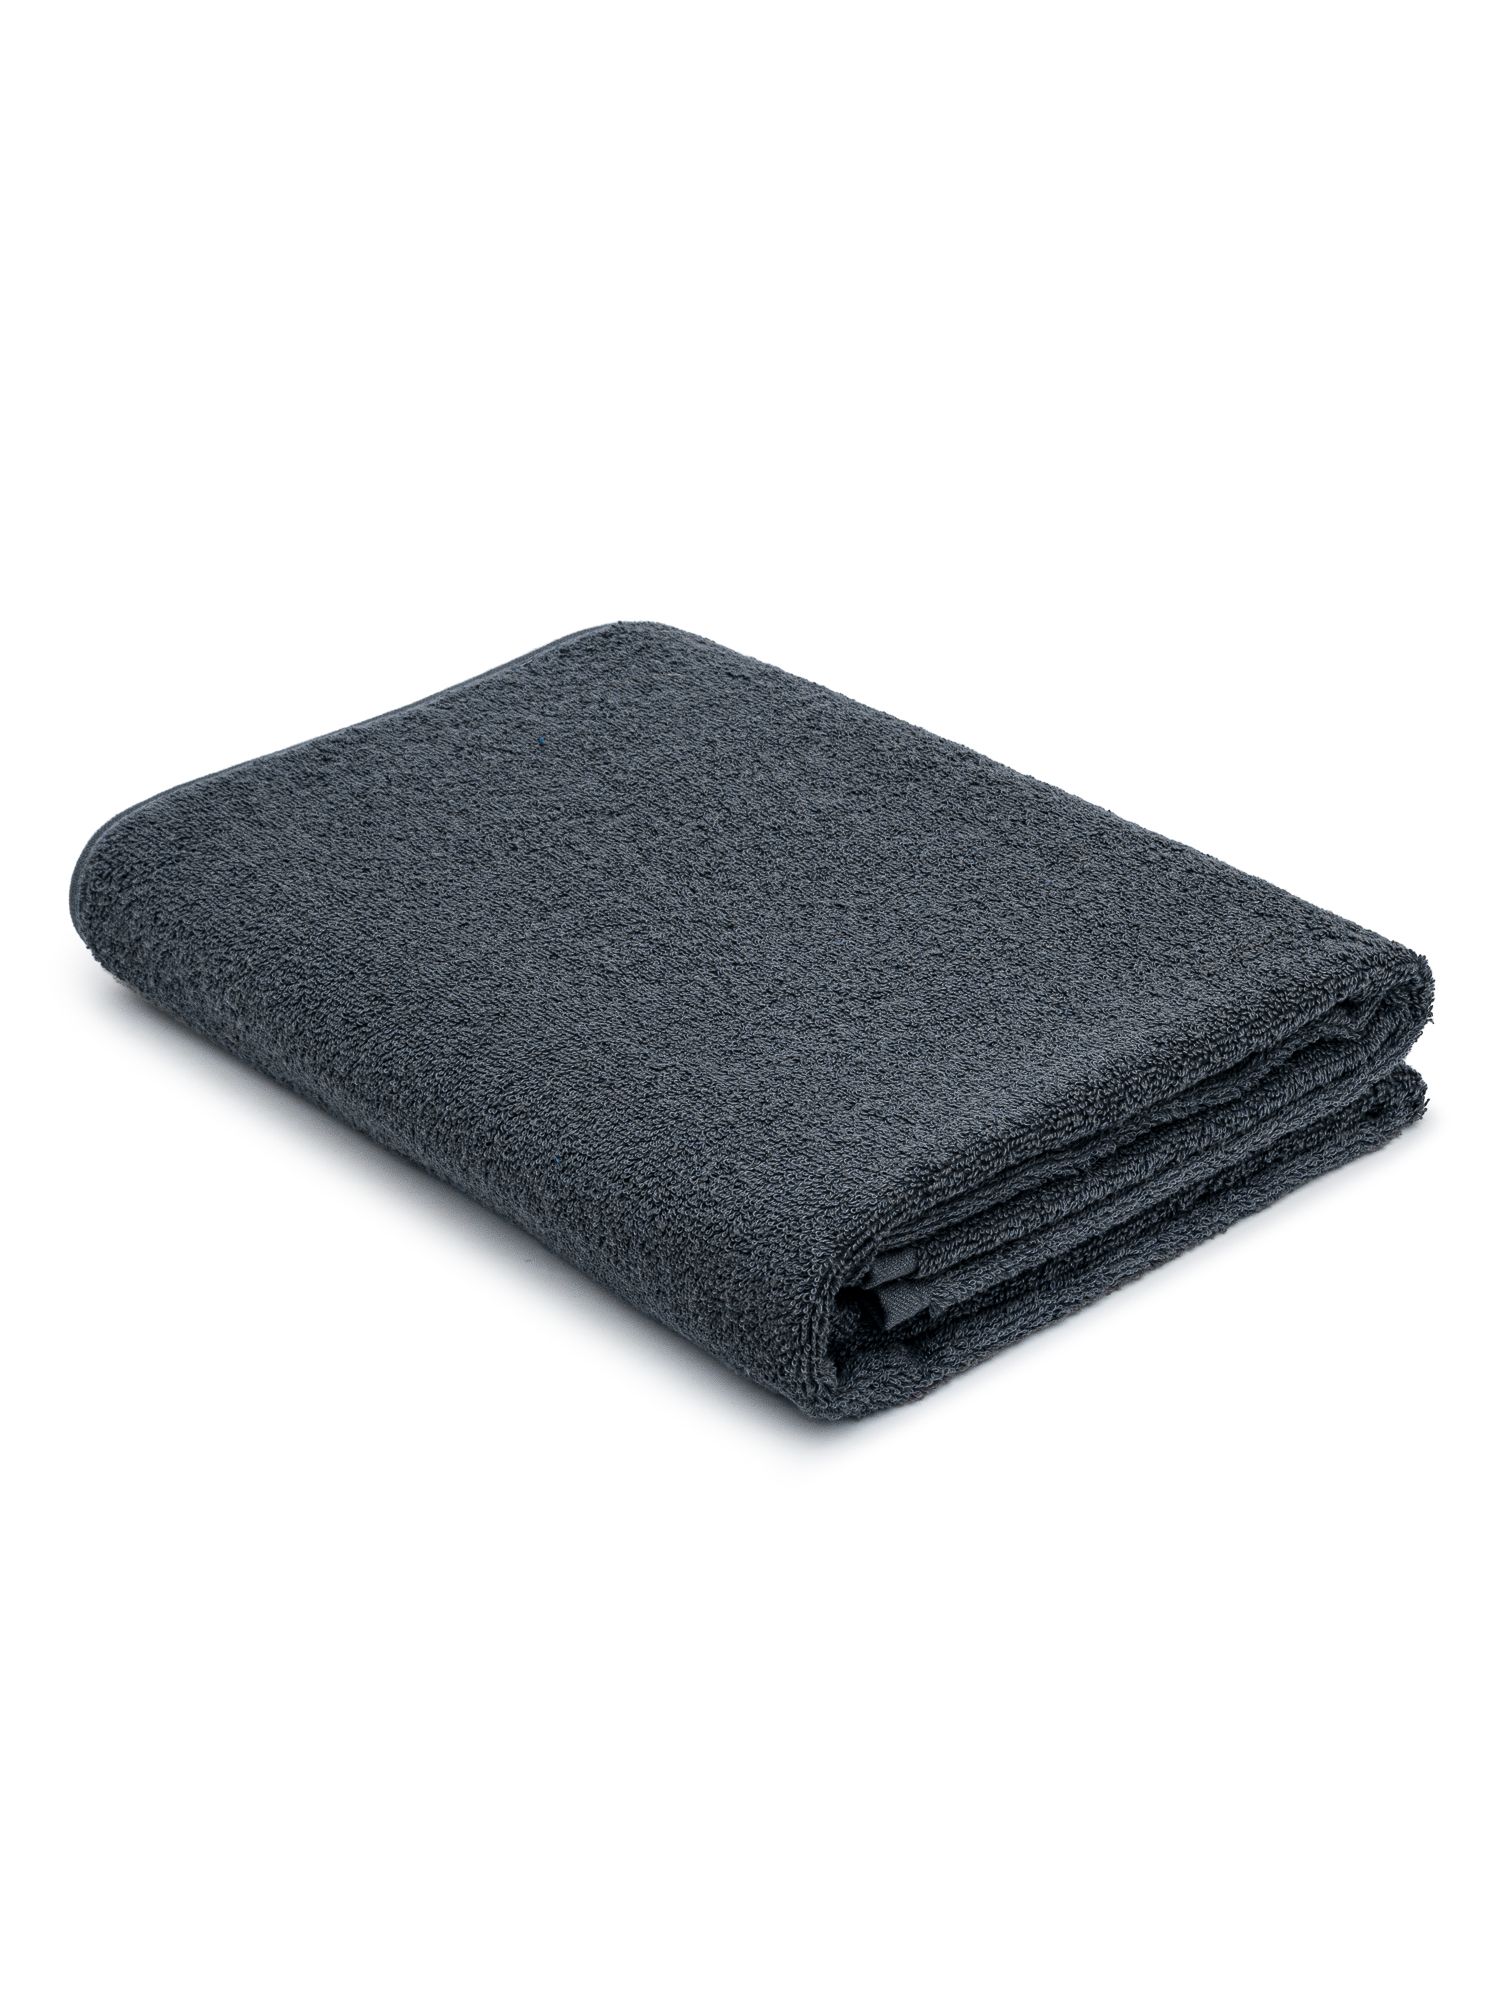 Махровое полотенце для лица 50х100 банное TCStyle серого цвета 1 шт. 470 гр/м2